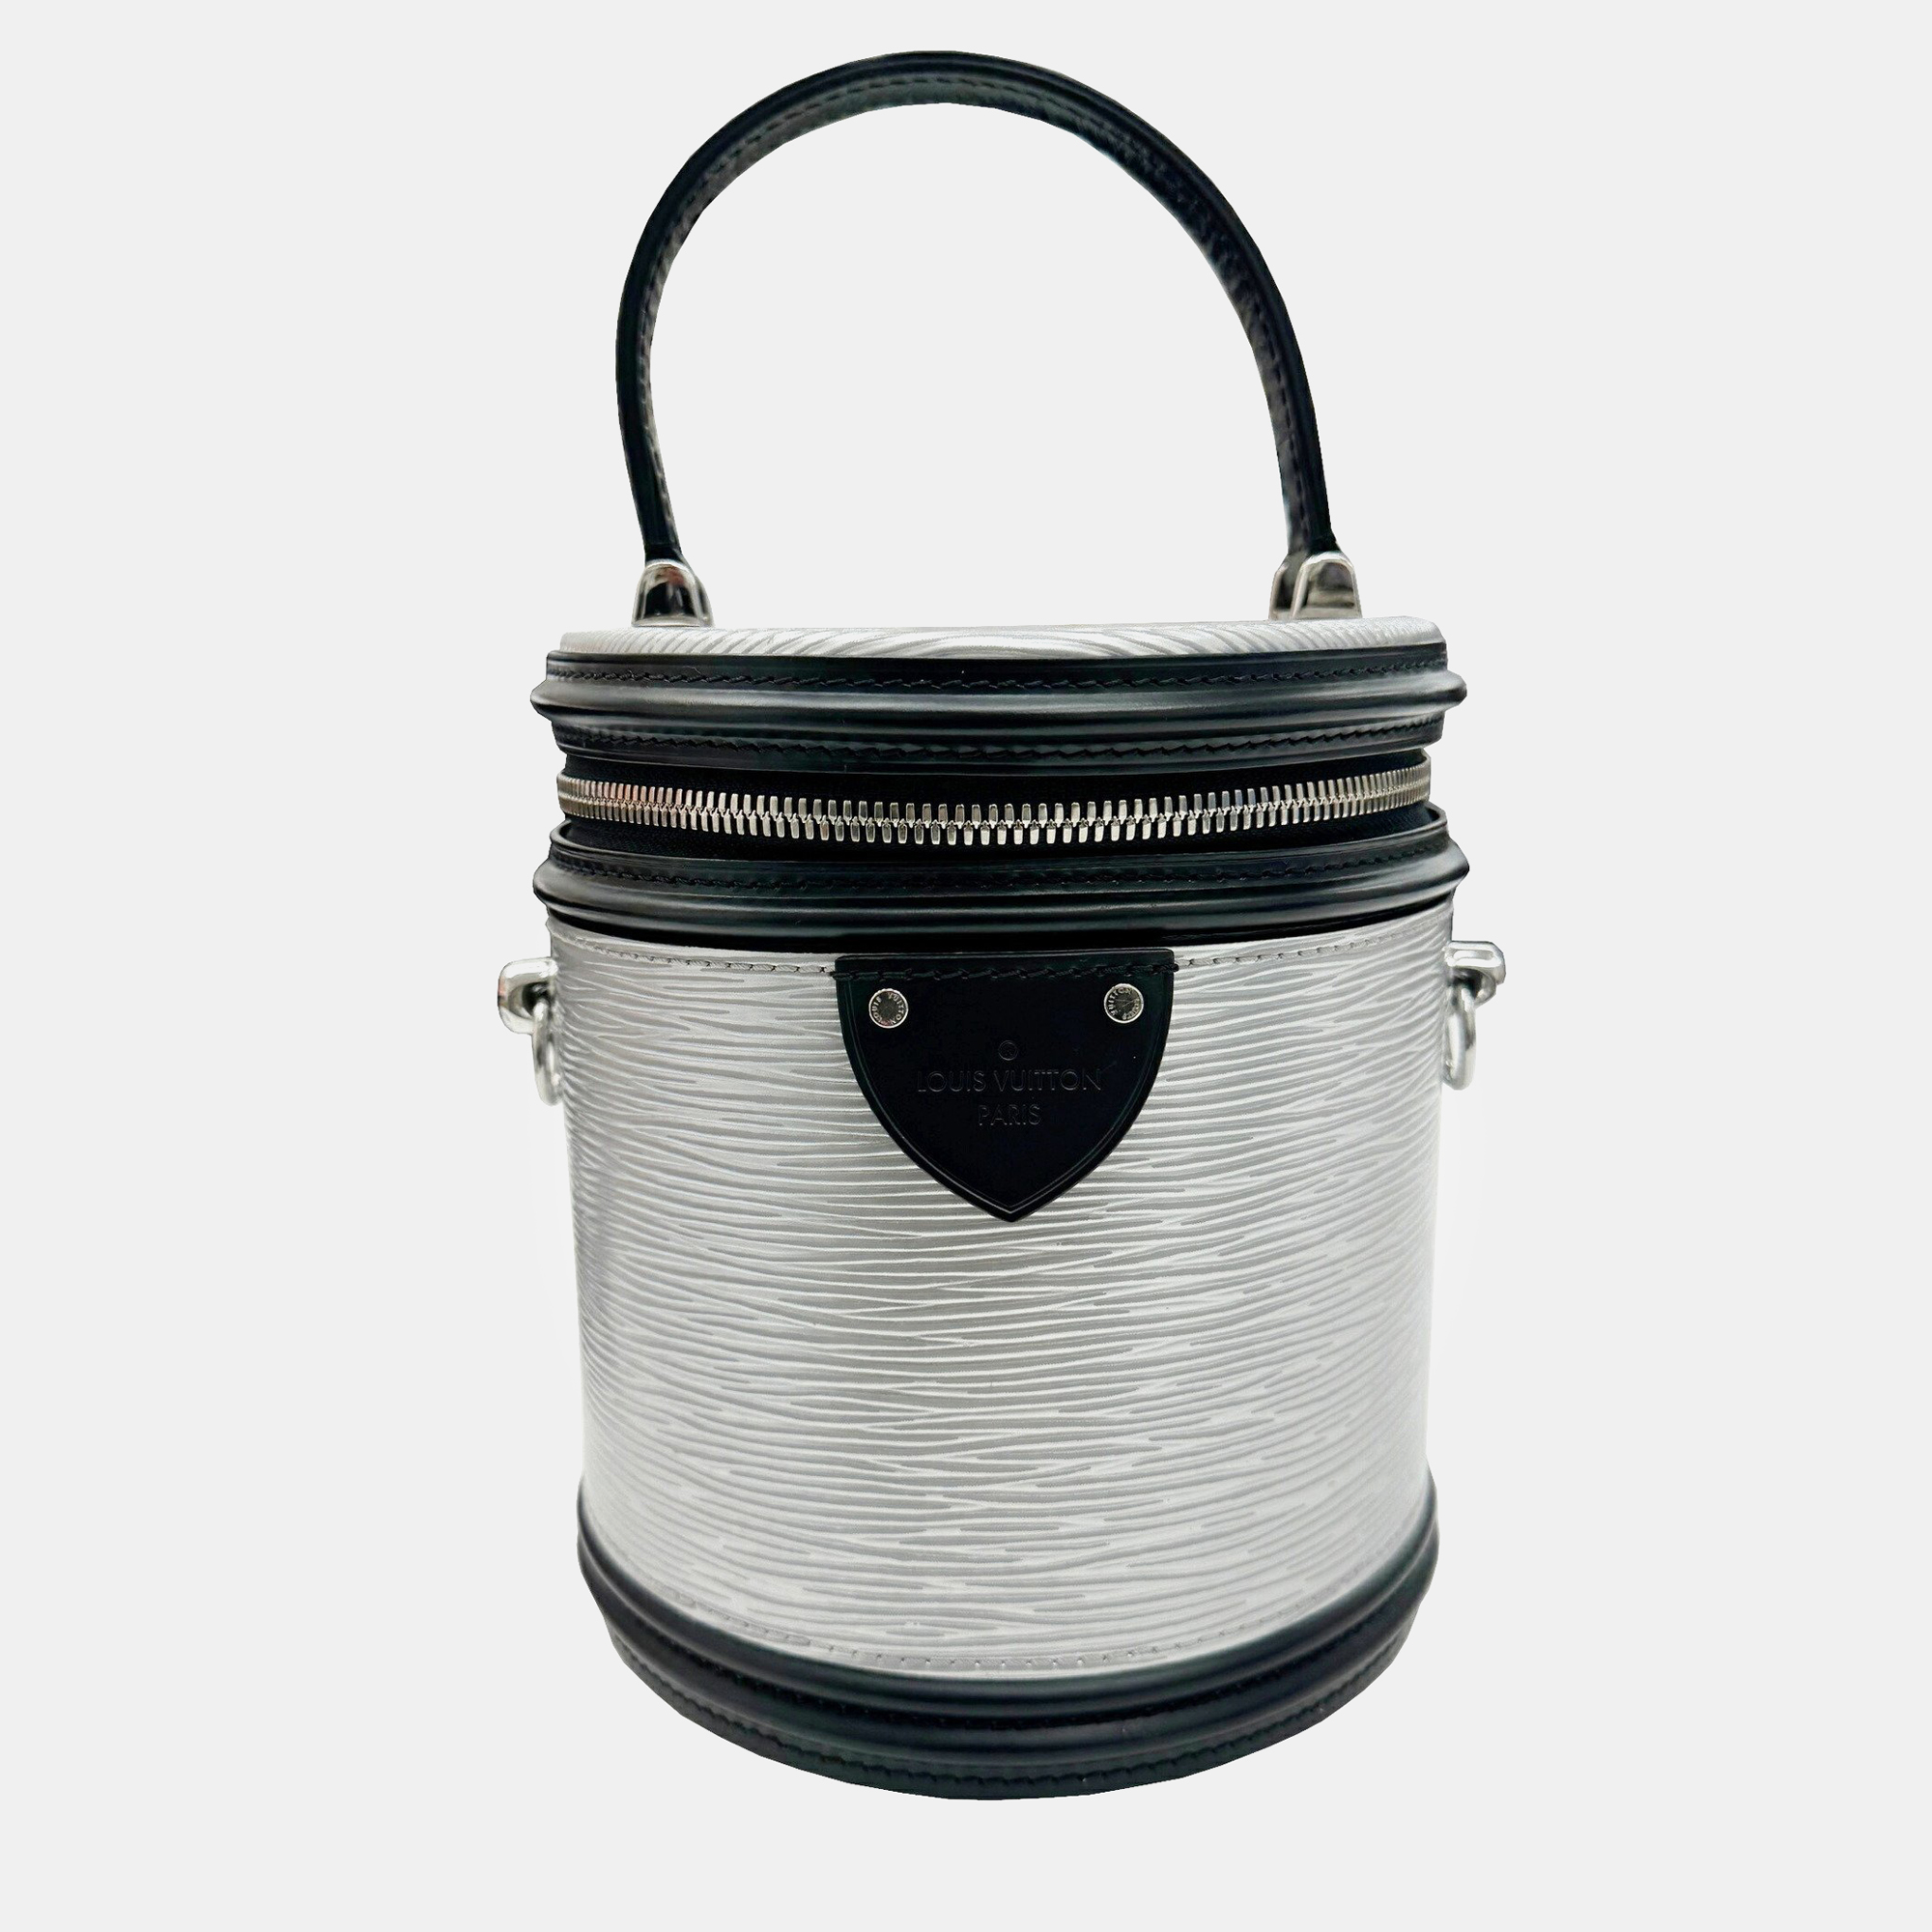 Louis vuitton silver/black leather cannes top handle bag